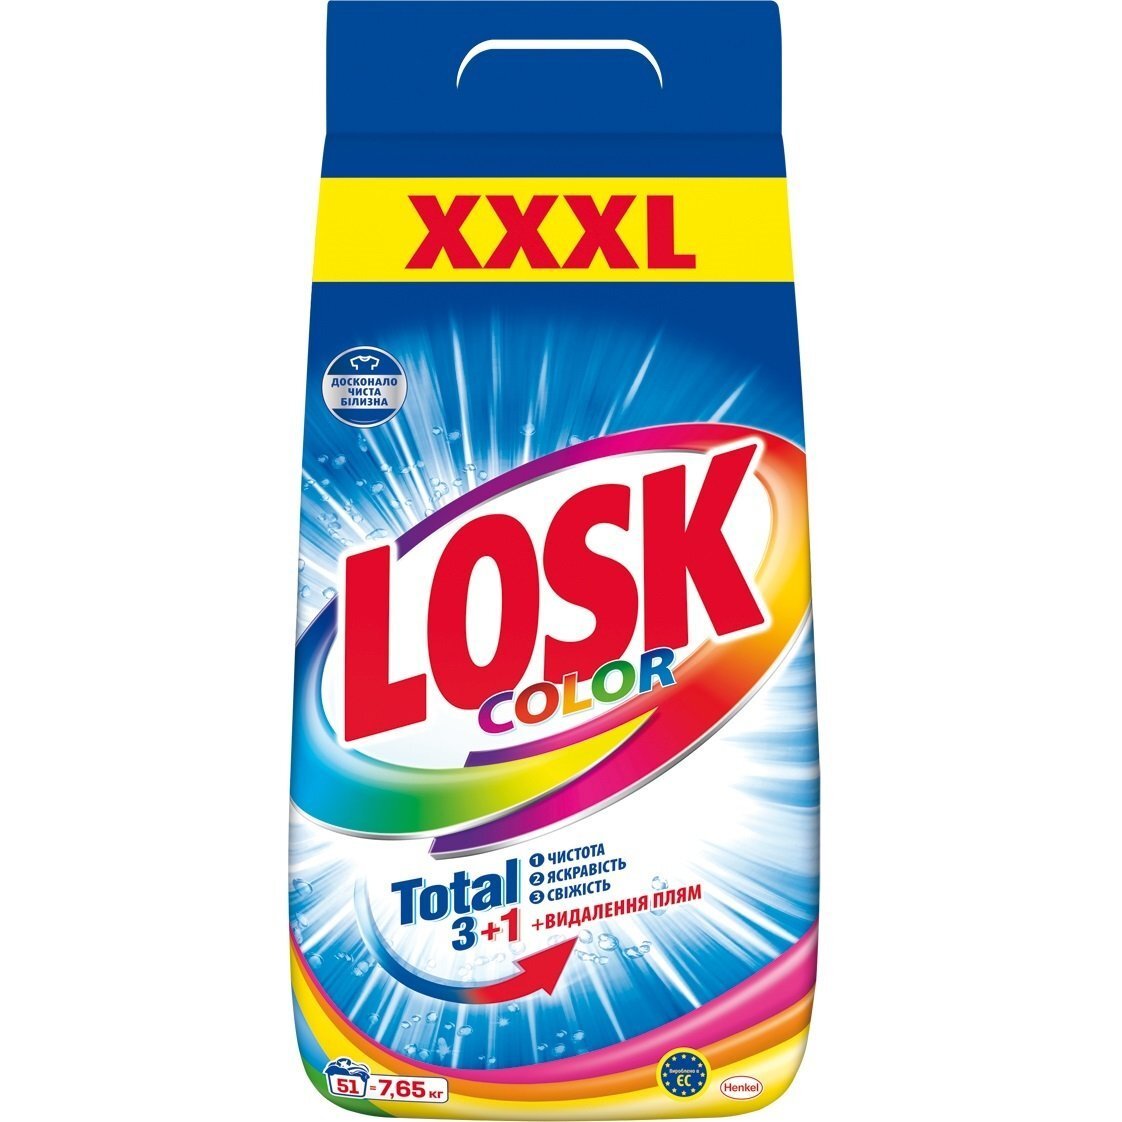 Порошок для прання Losk Color автомат 7,65 кгфото